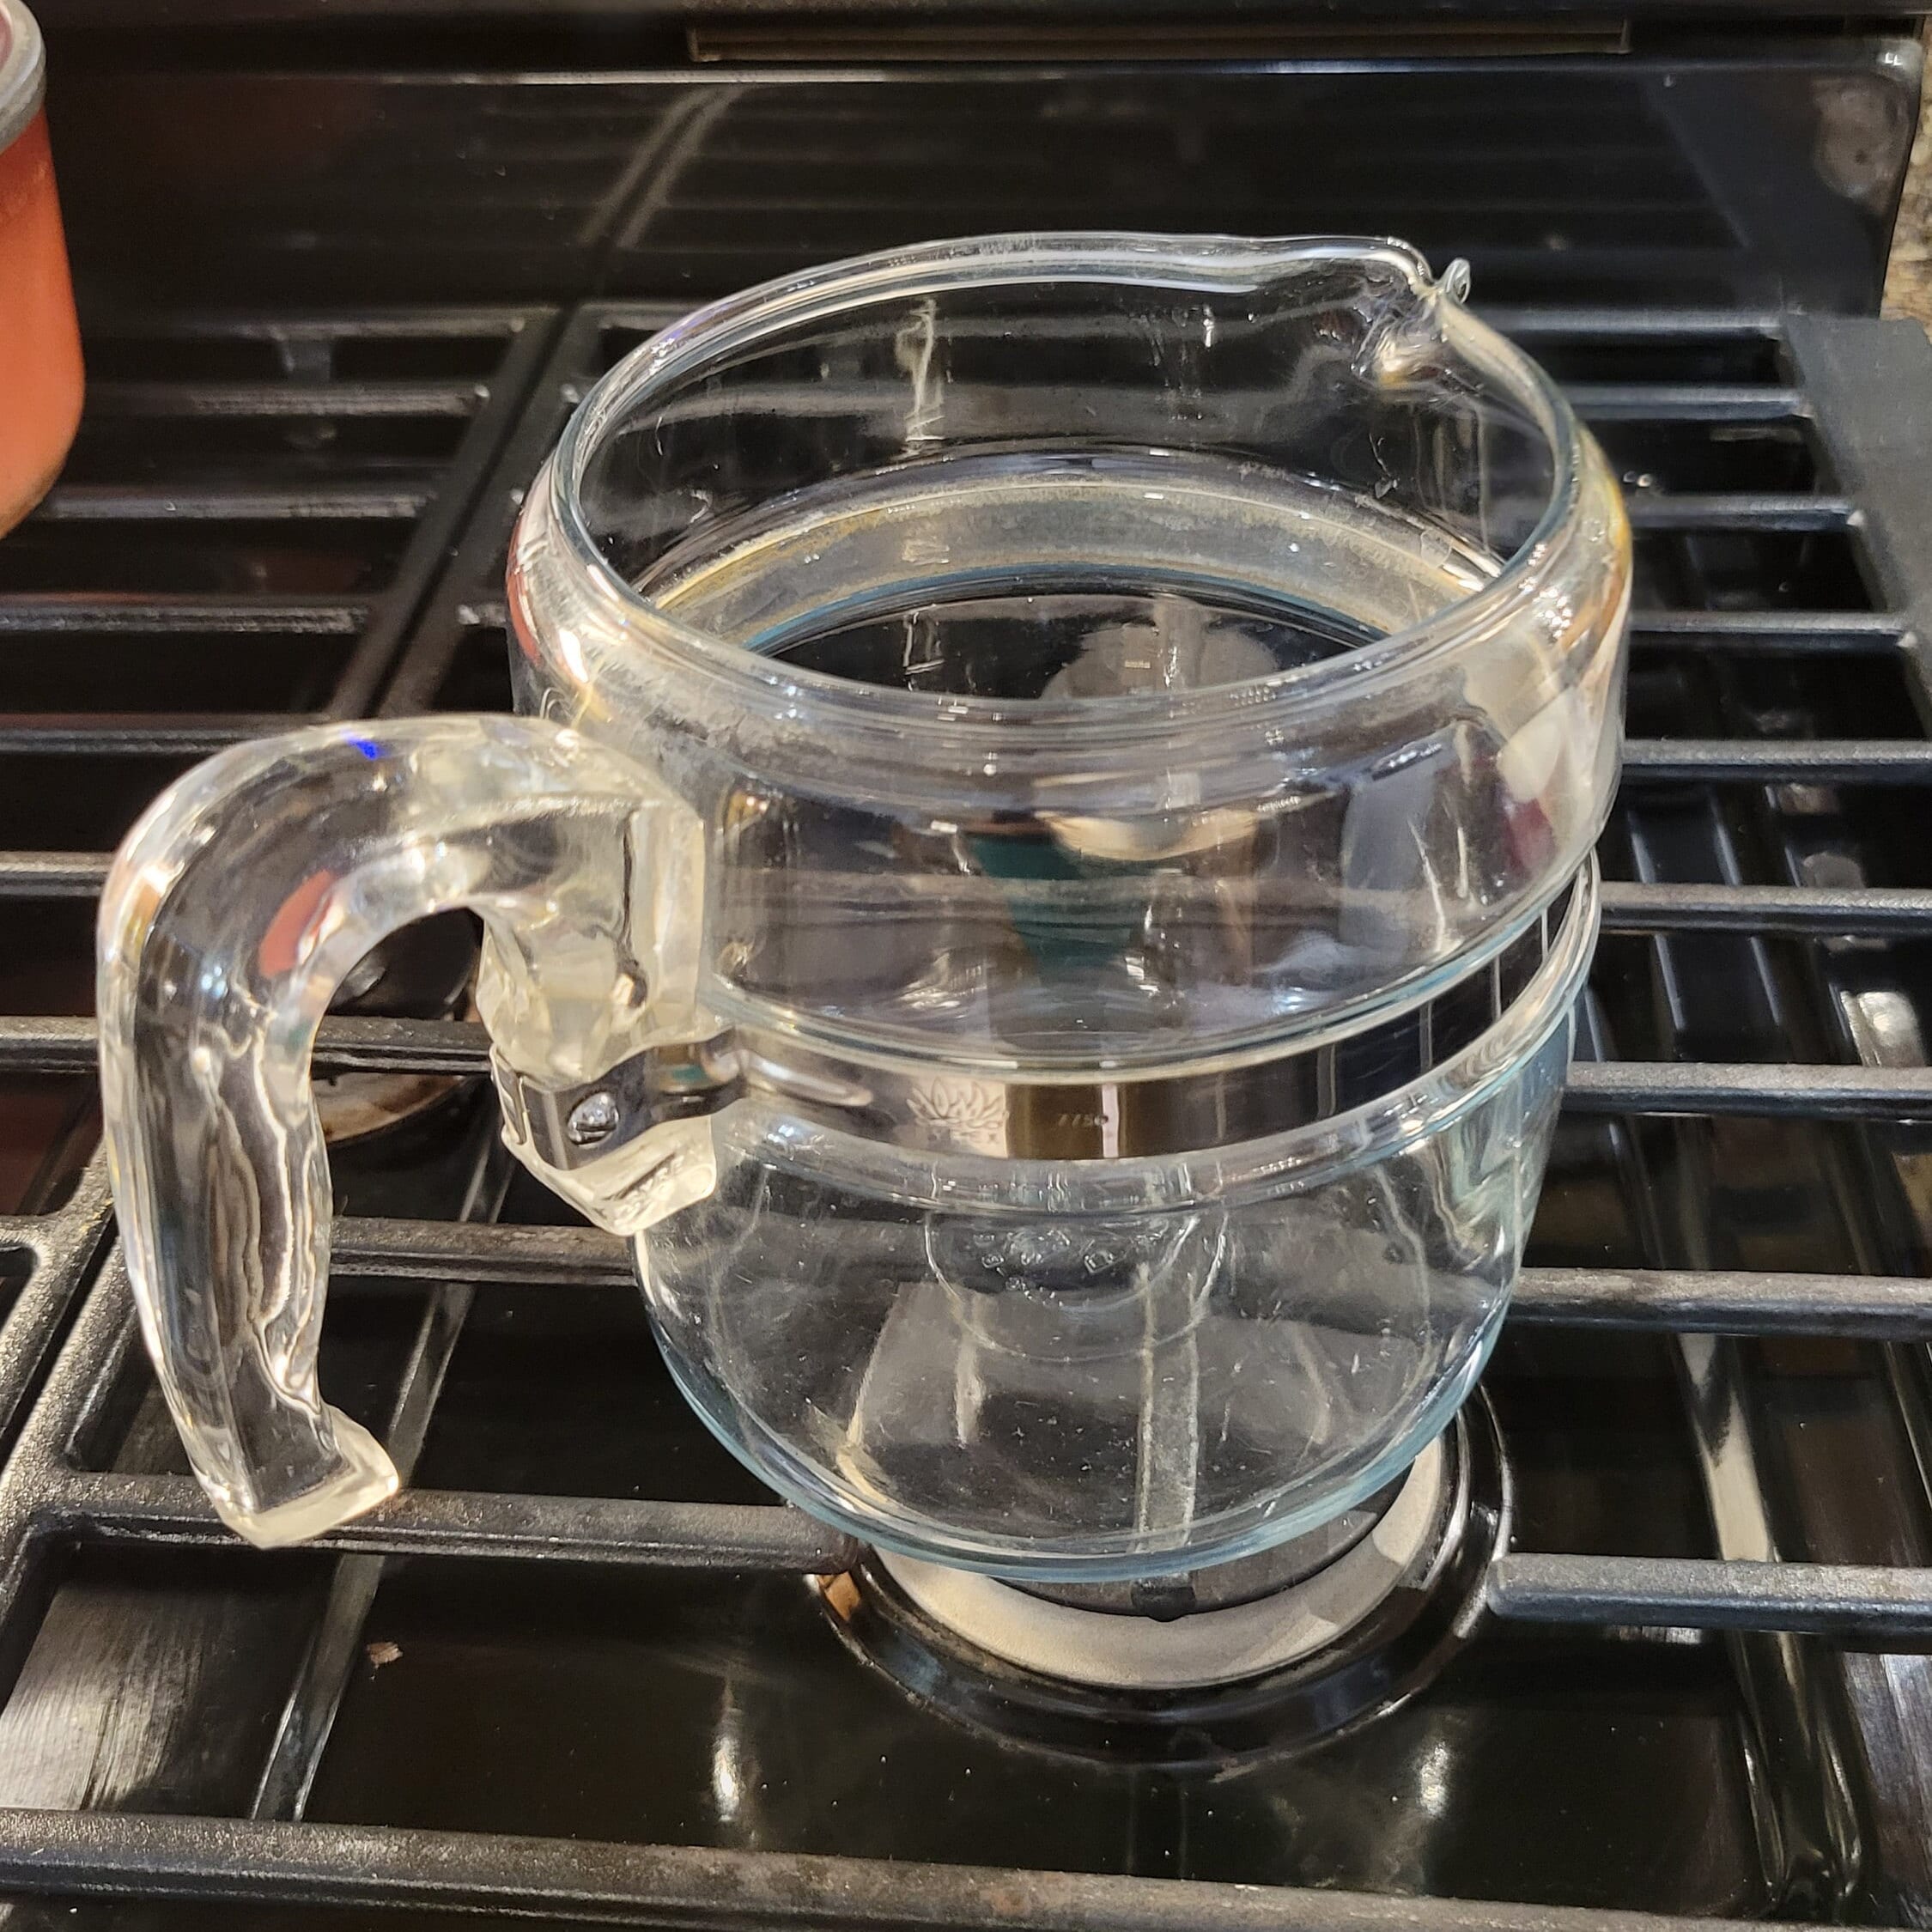 Replacement Percolator Glass Top x2 – COLETTI Coffee